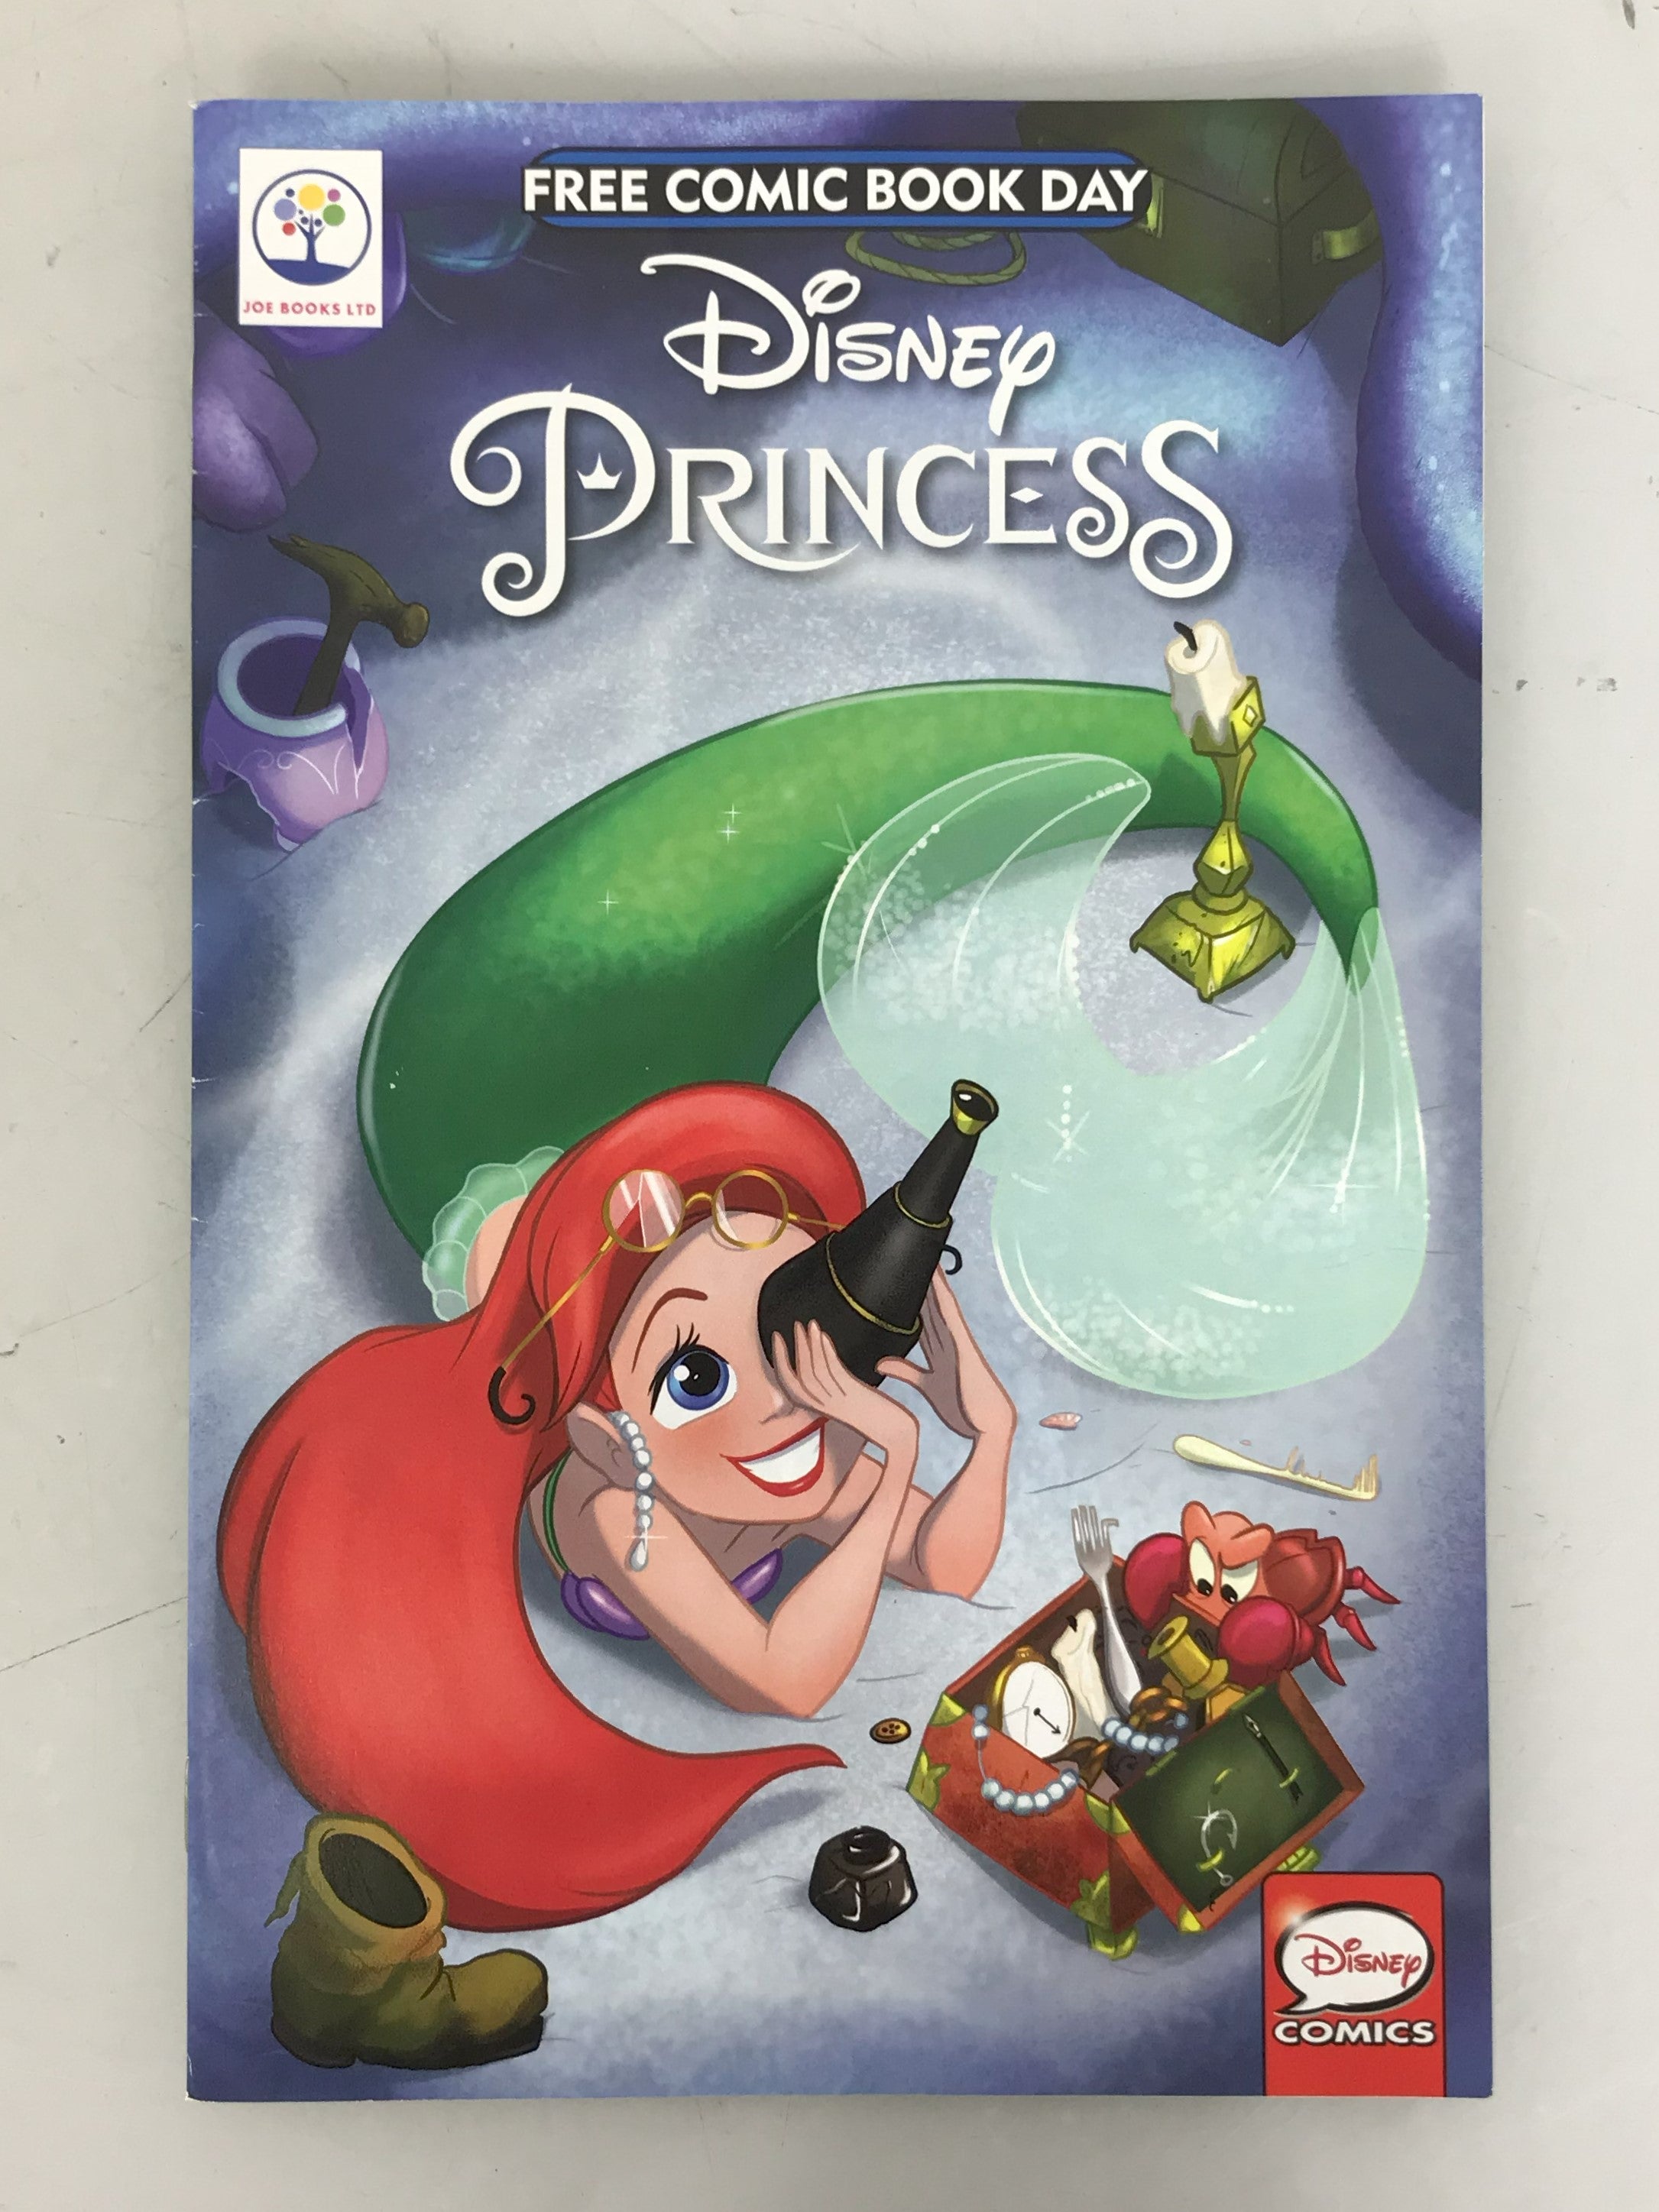 Disney Princess Free Comic Book Day 2018